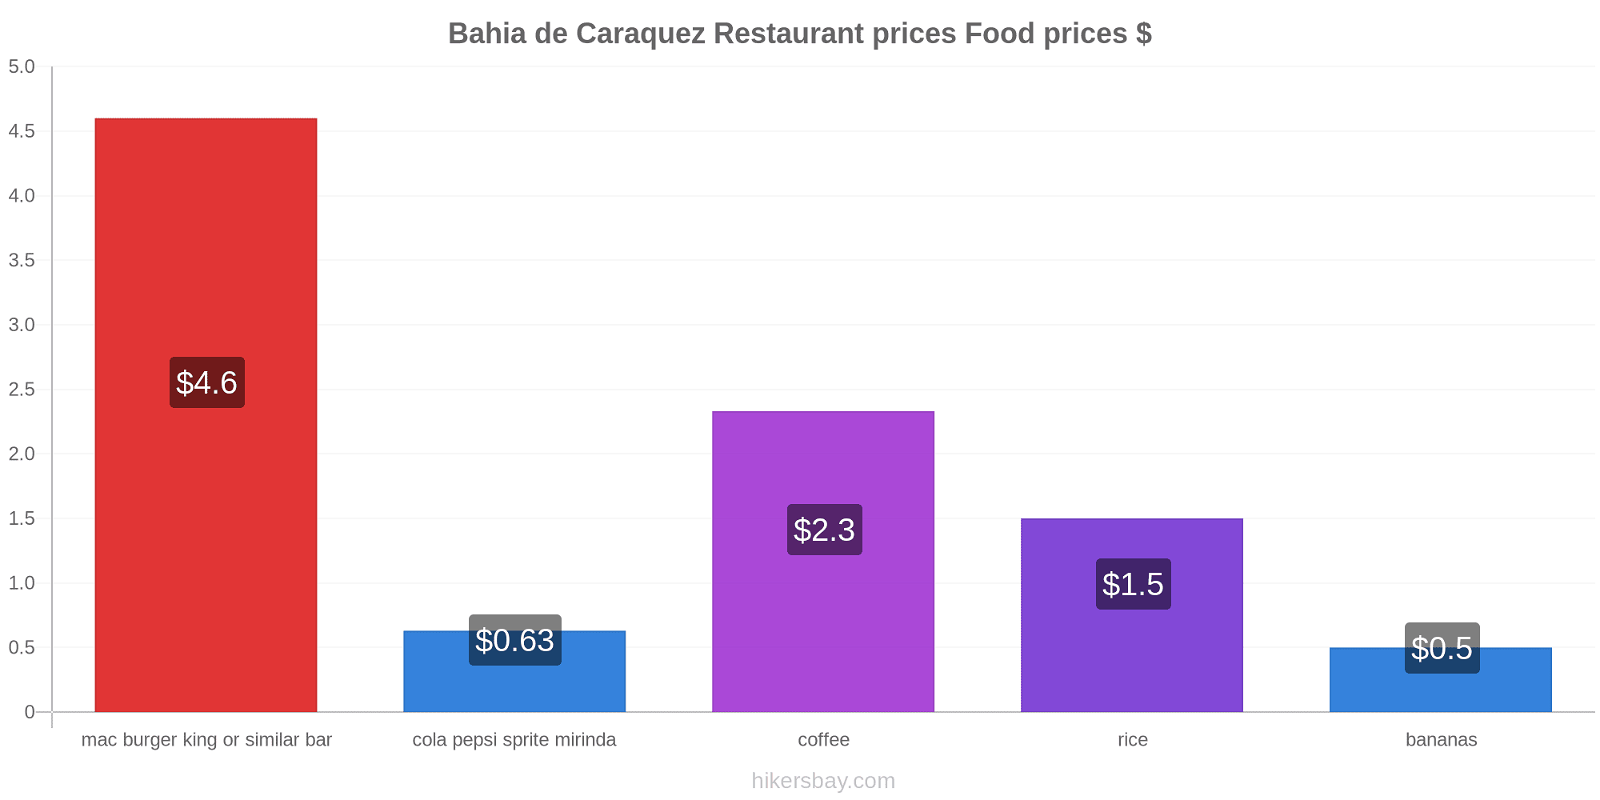 Bahia de Caraquez price changes hikersbay.com